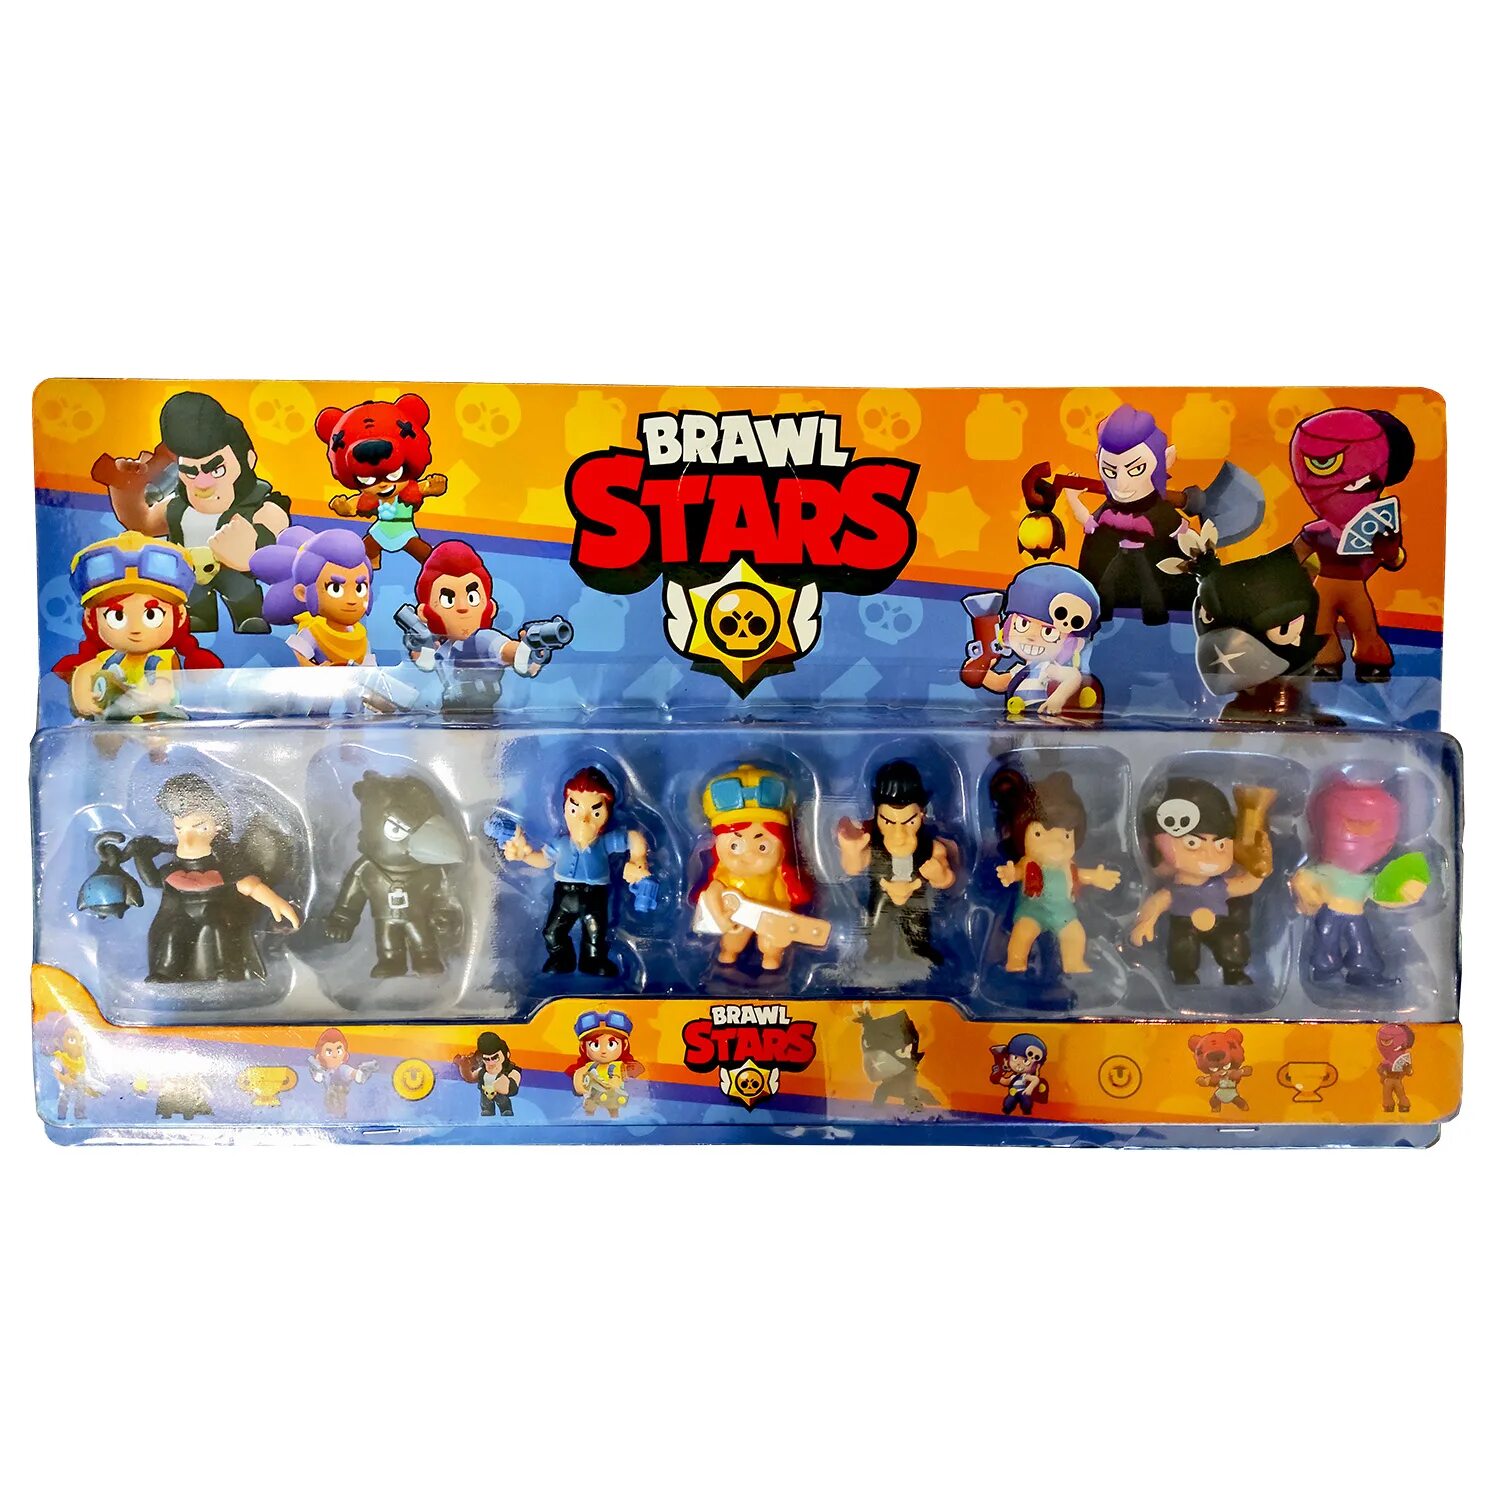 Stars фигурки. Лего фигурки Brawl Stars. Brawl Stars игрушки фигурки. Наборы Brawl Stars набор Brawl Stars. Игрушки Brawl Stars игрушки Brawl Stars.